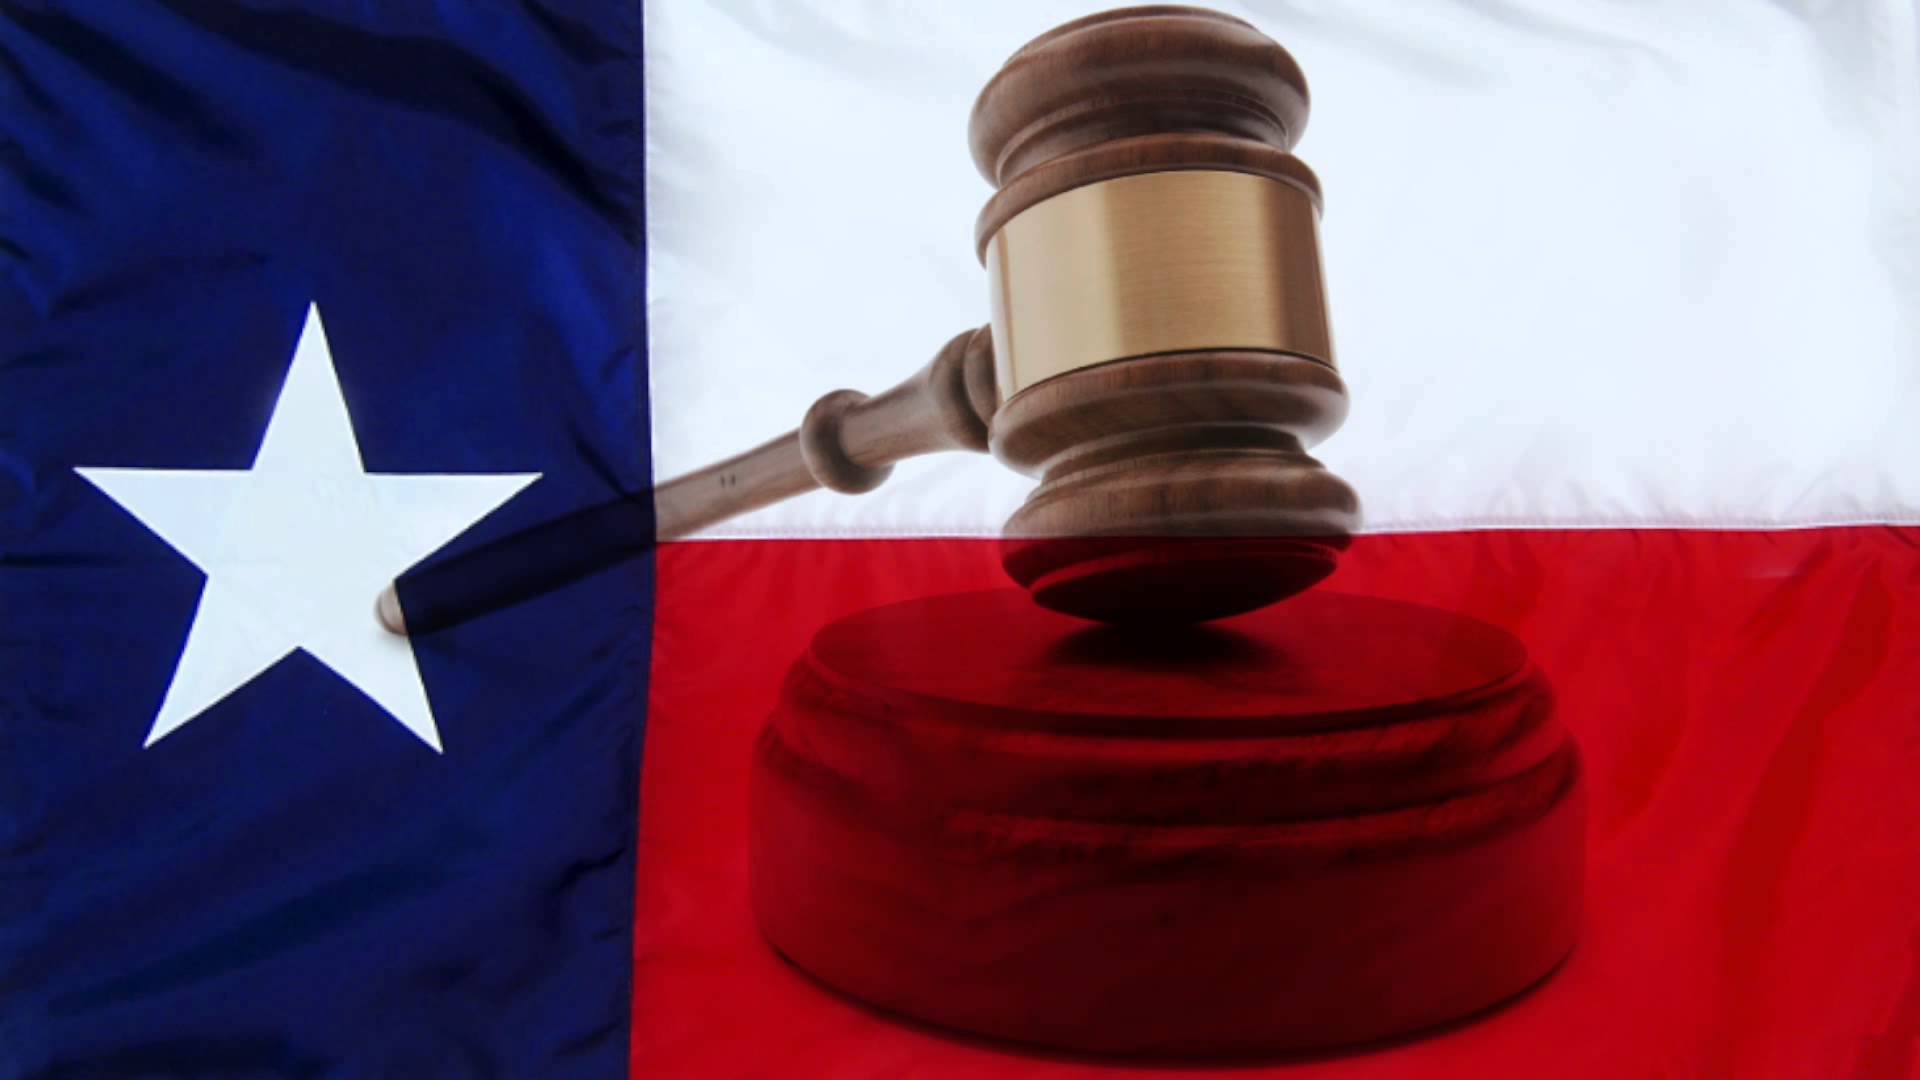 2020 Texas Divorce: What Happens During the Divorce Process?